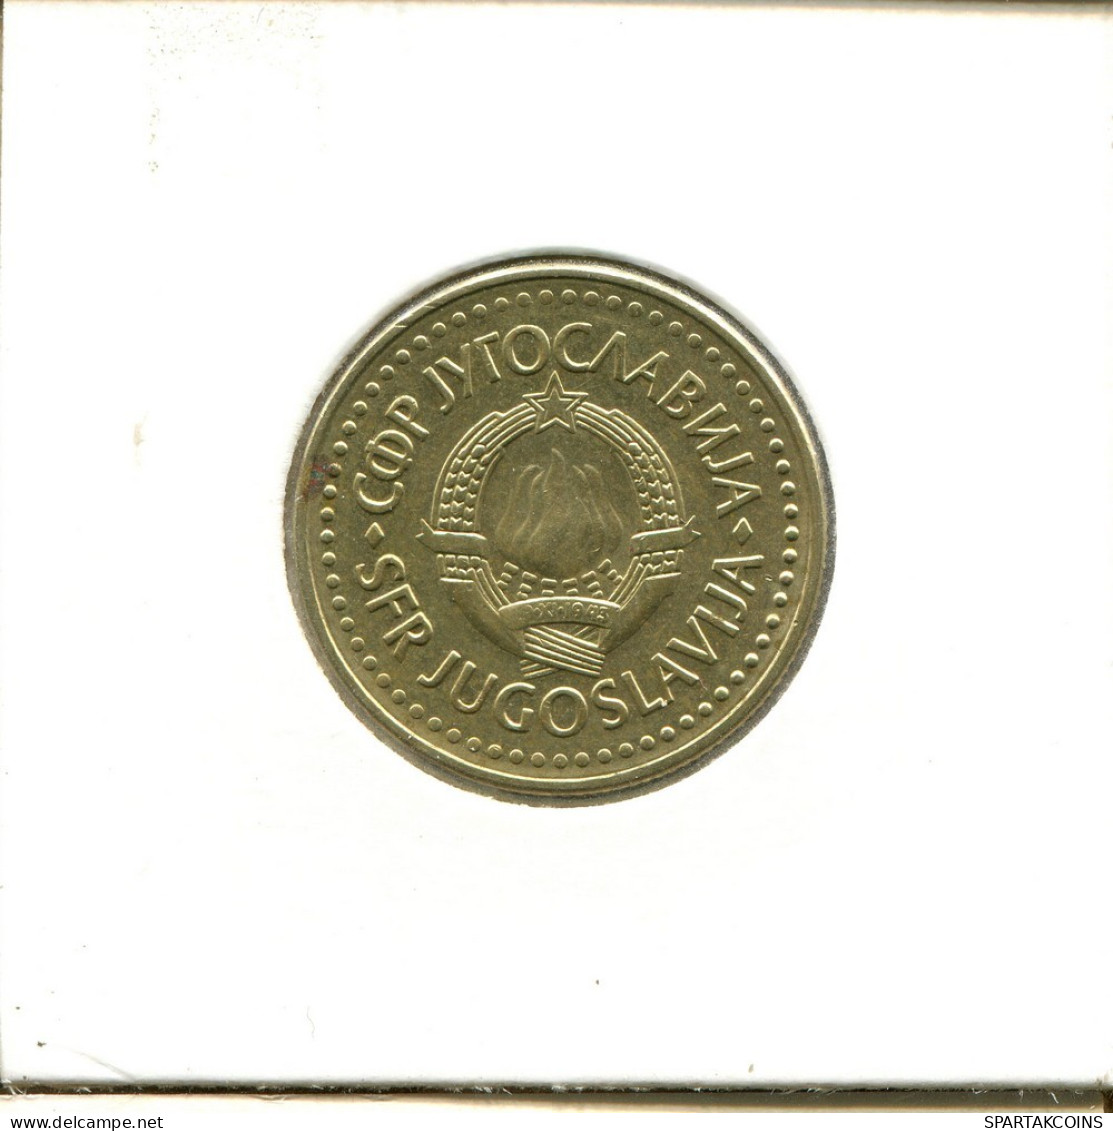 5 DINARA 1985 YUGOSLAVIA Moneda #AS612.E.A - Yougoslavie